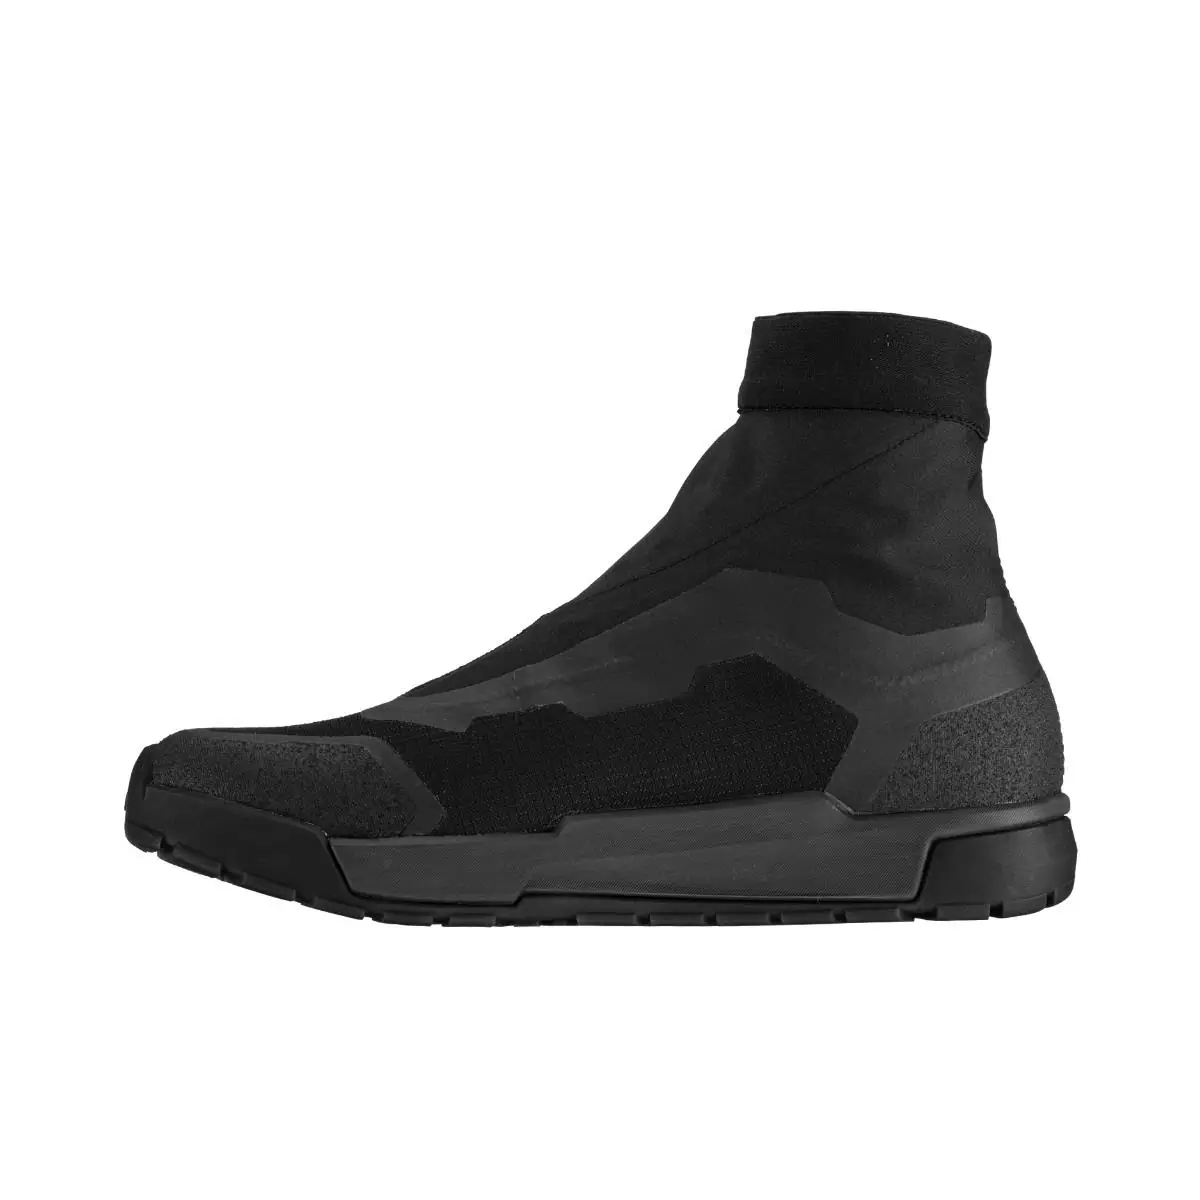 Waterproof Shoes MTB 7.0 HydraDri Flat Black Size 41.5 #5